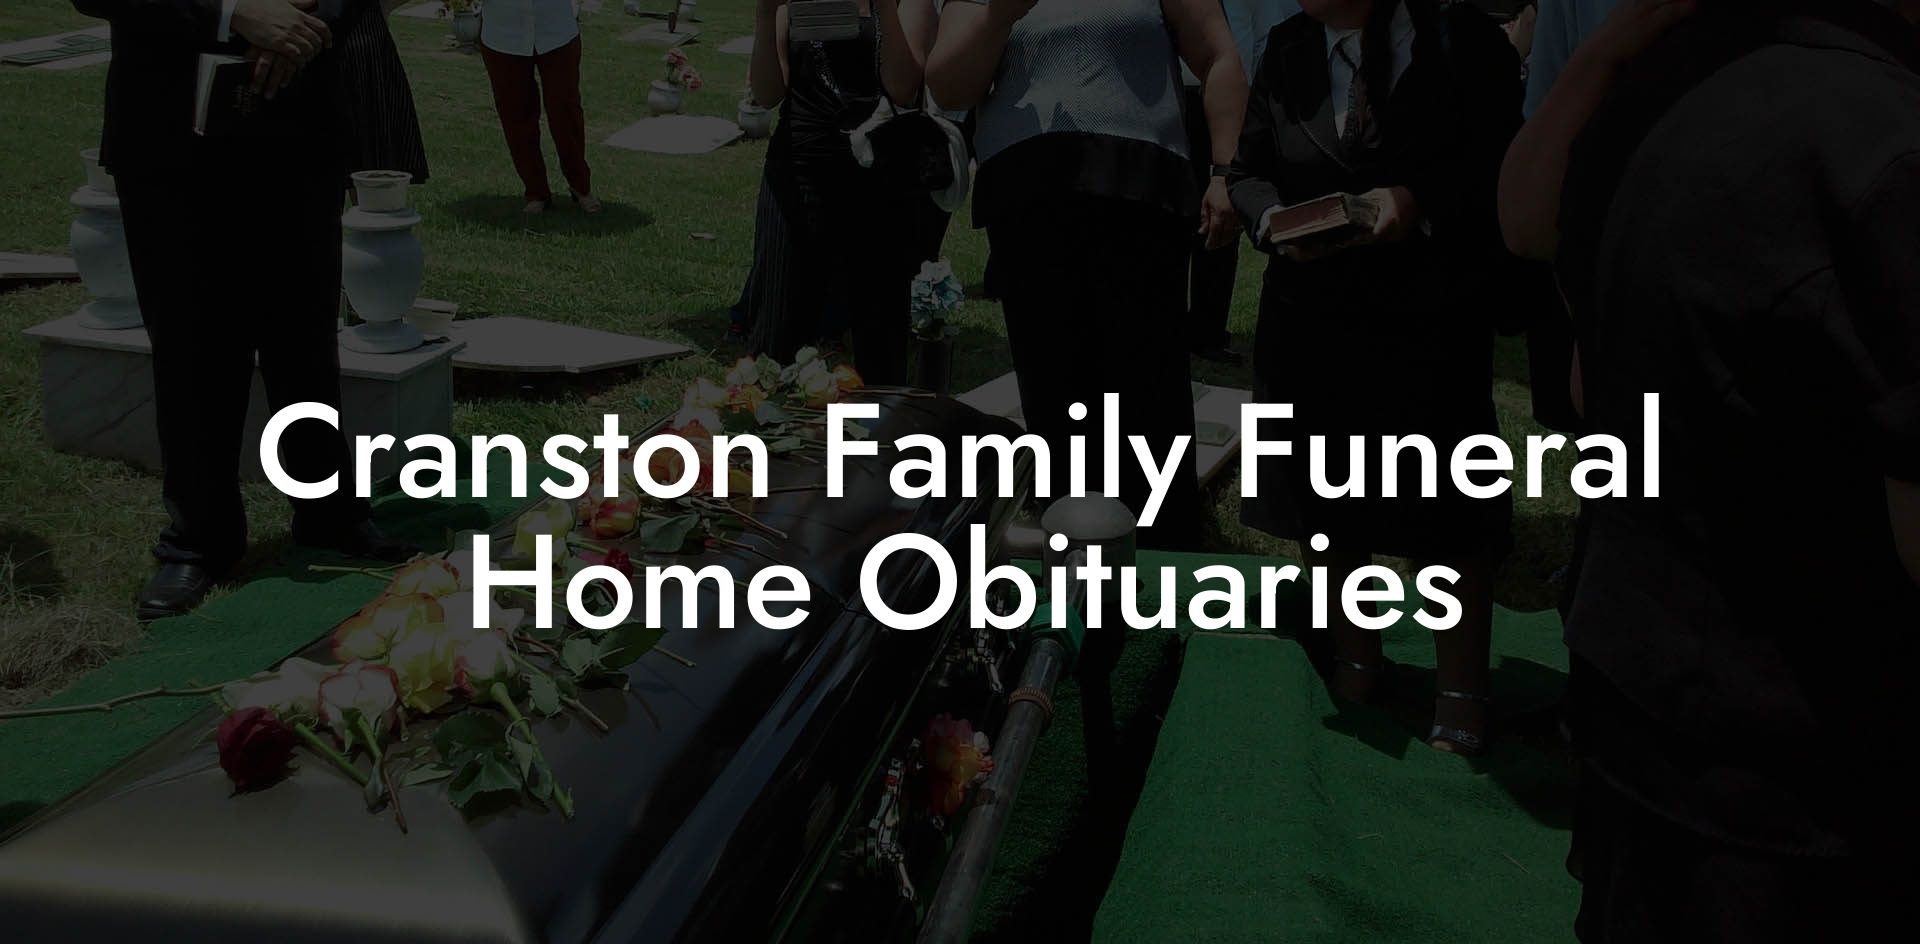 Cranston Family Funeral Home Obituaries